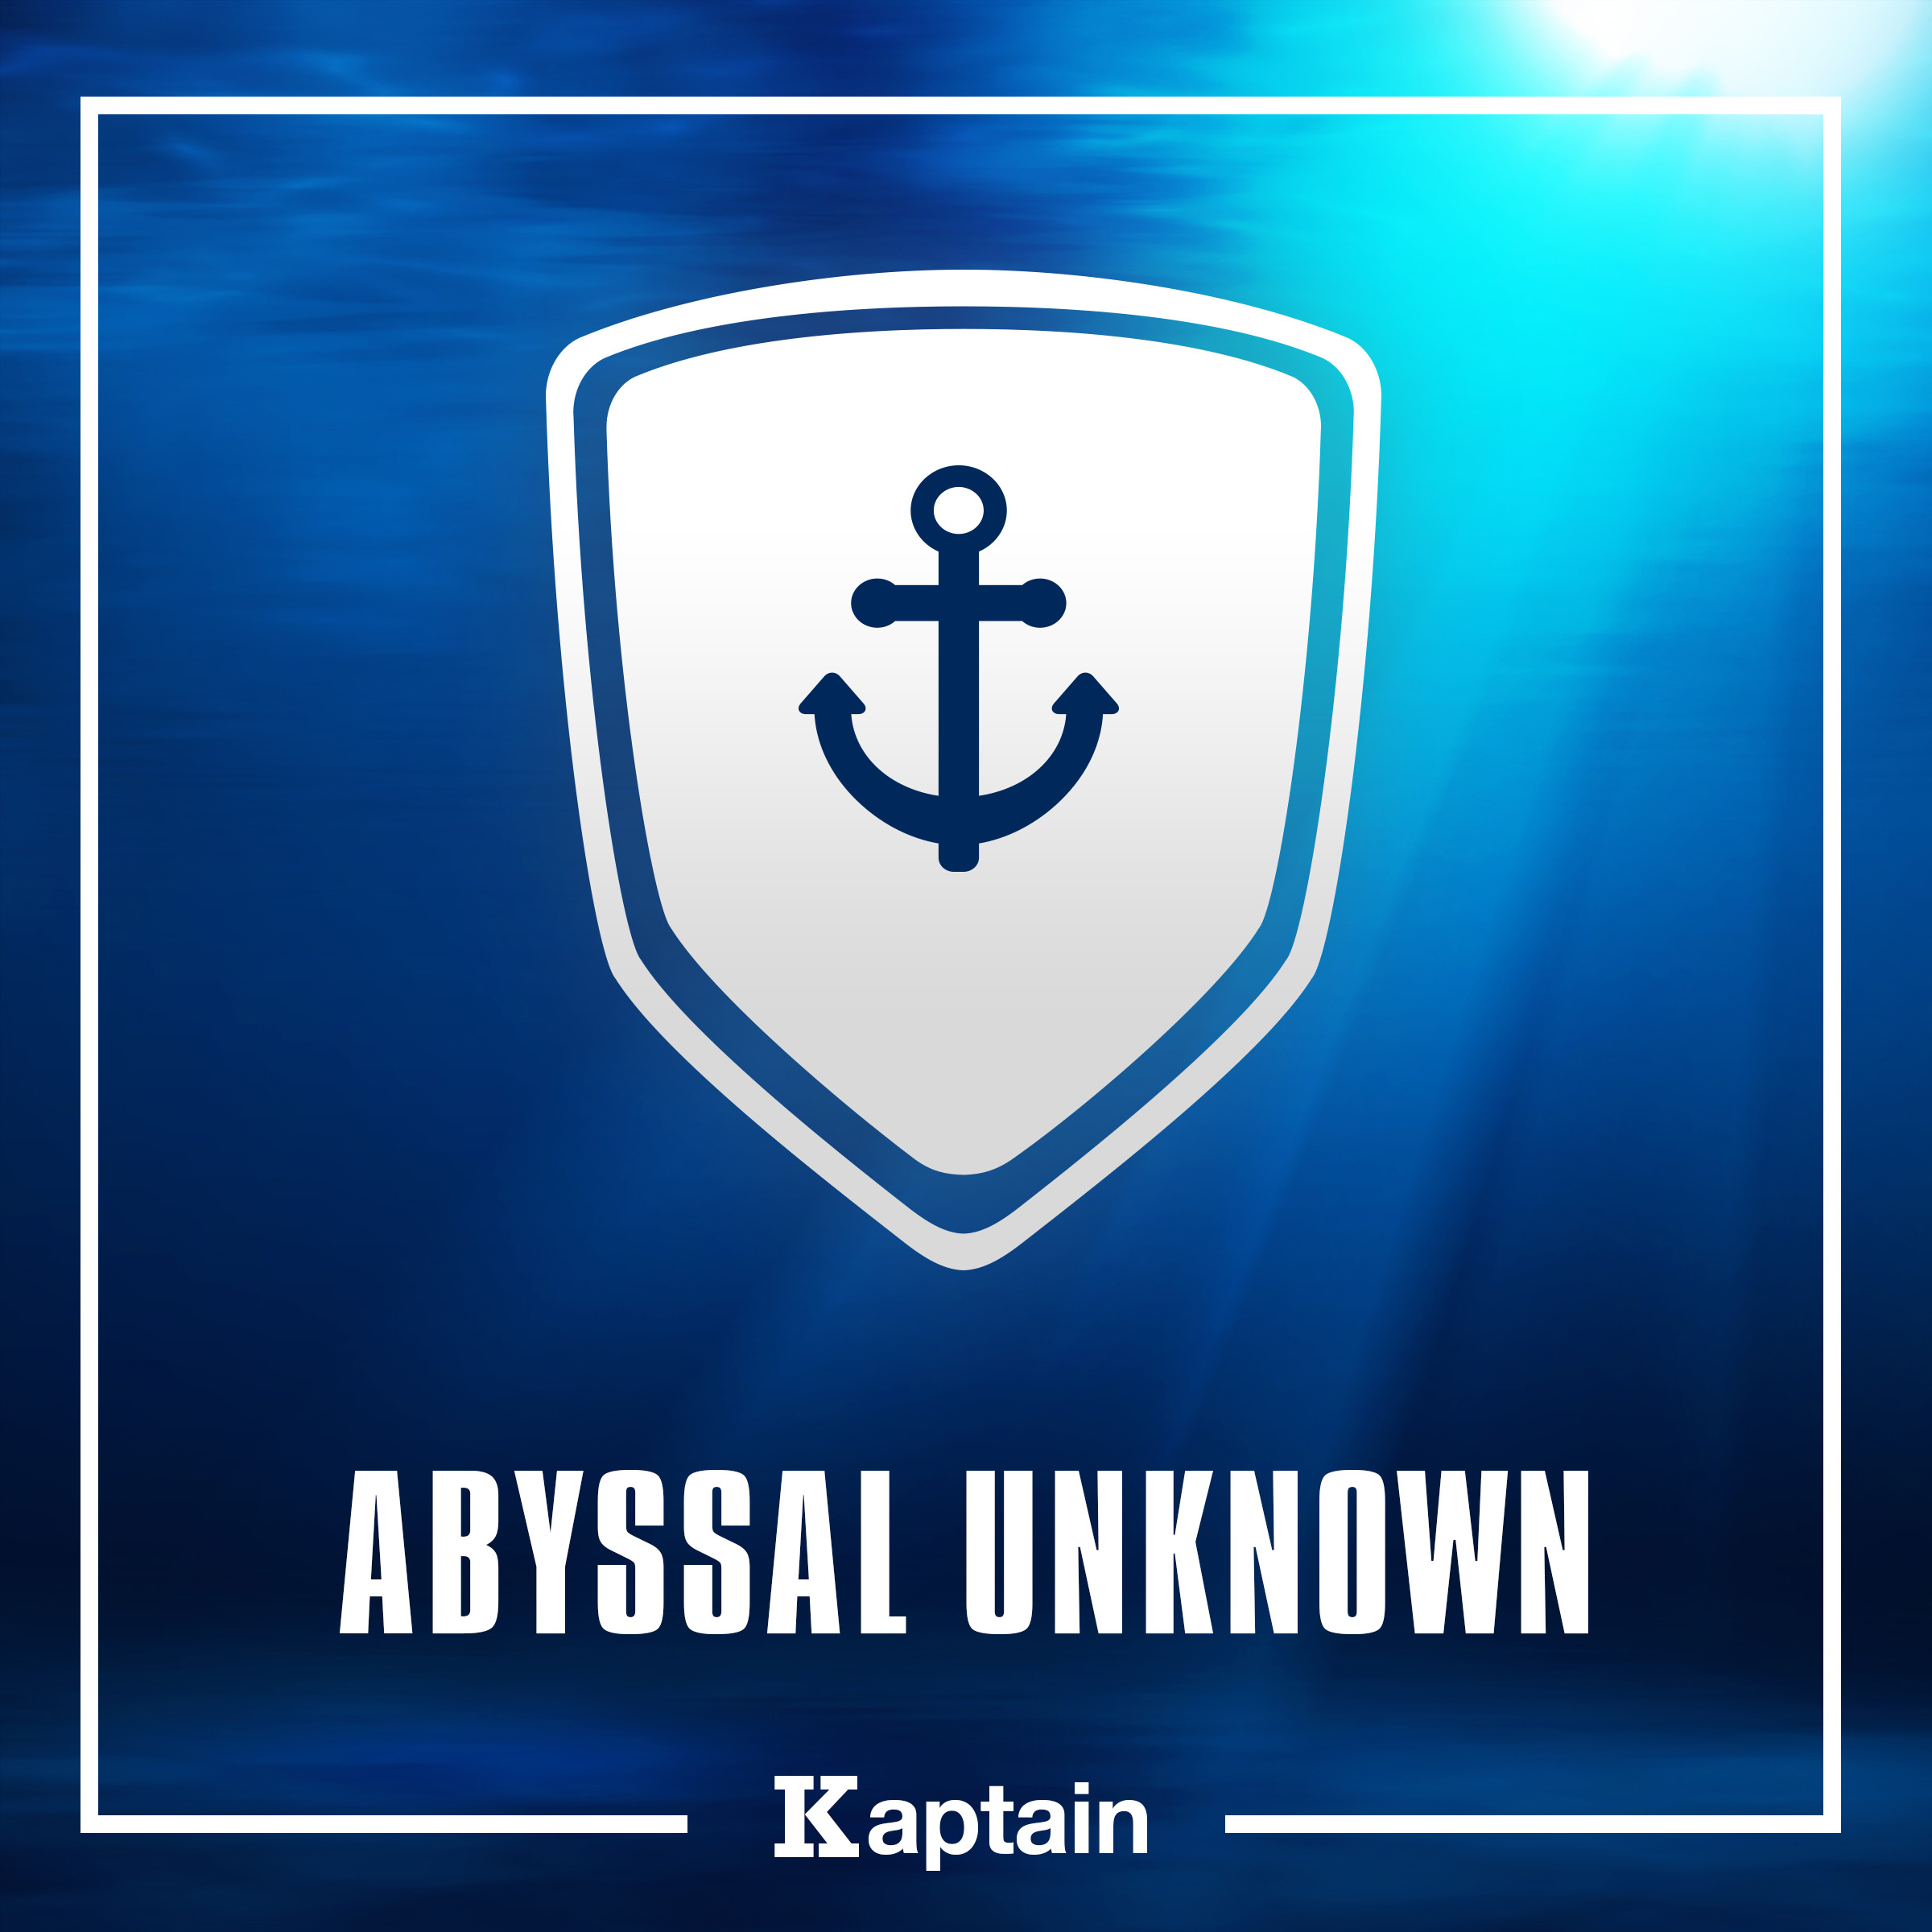 Abyssal Unknown